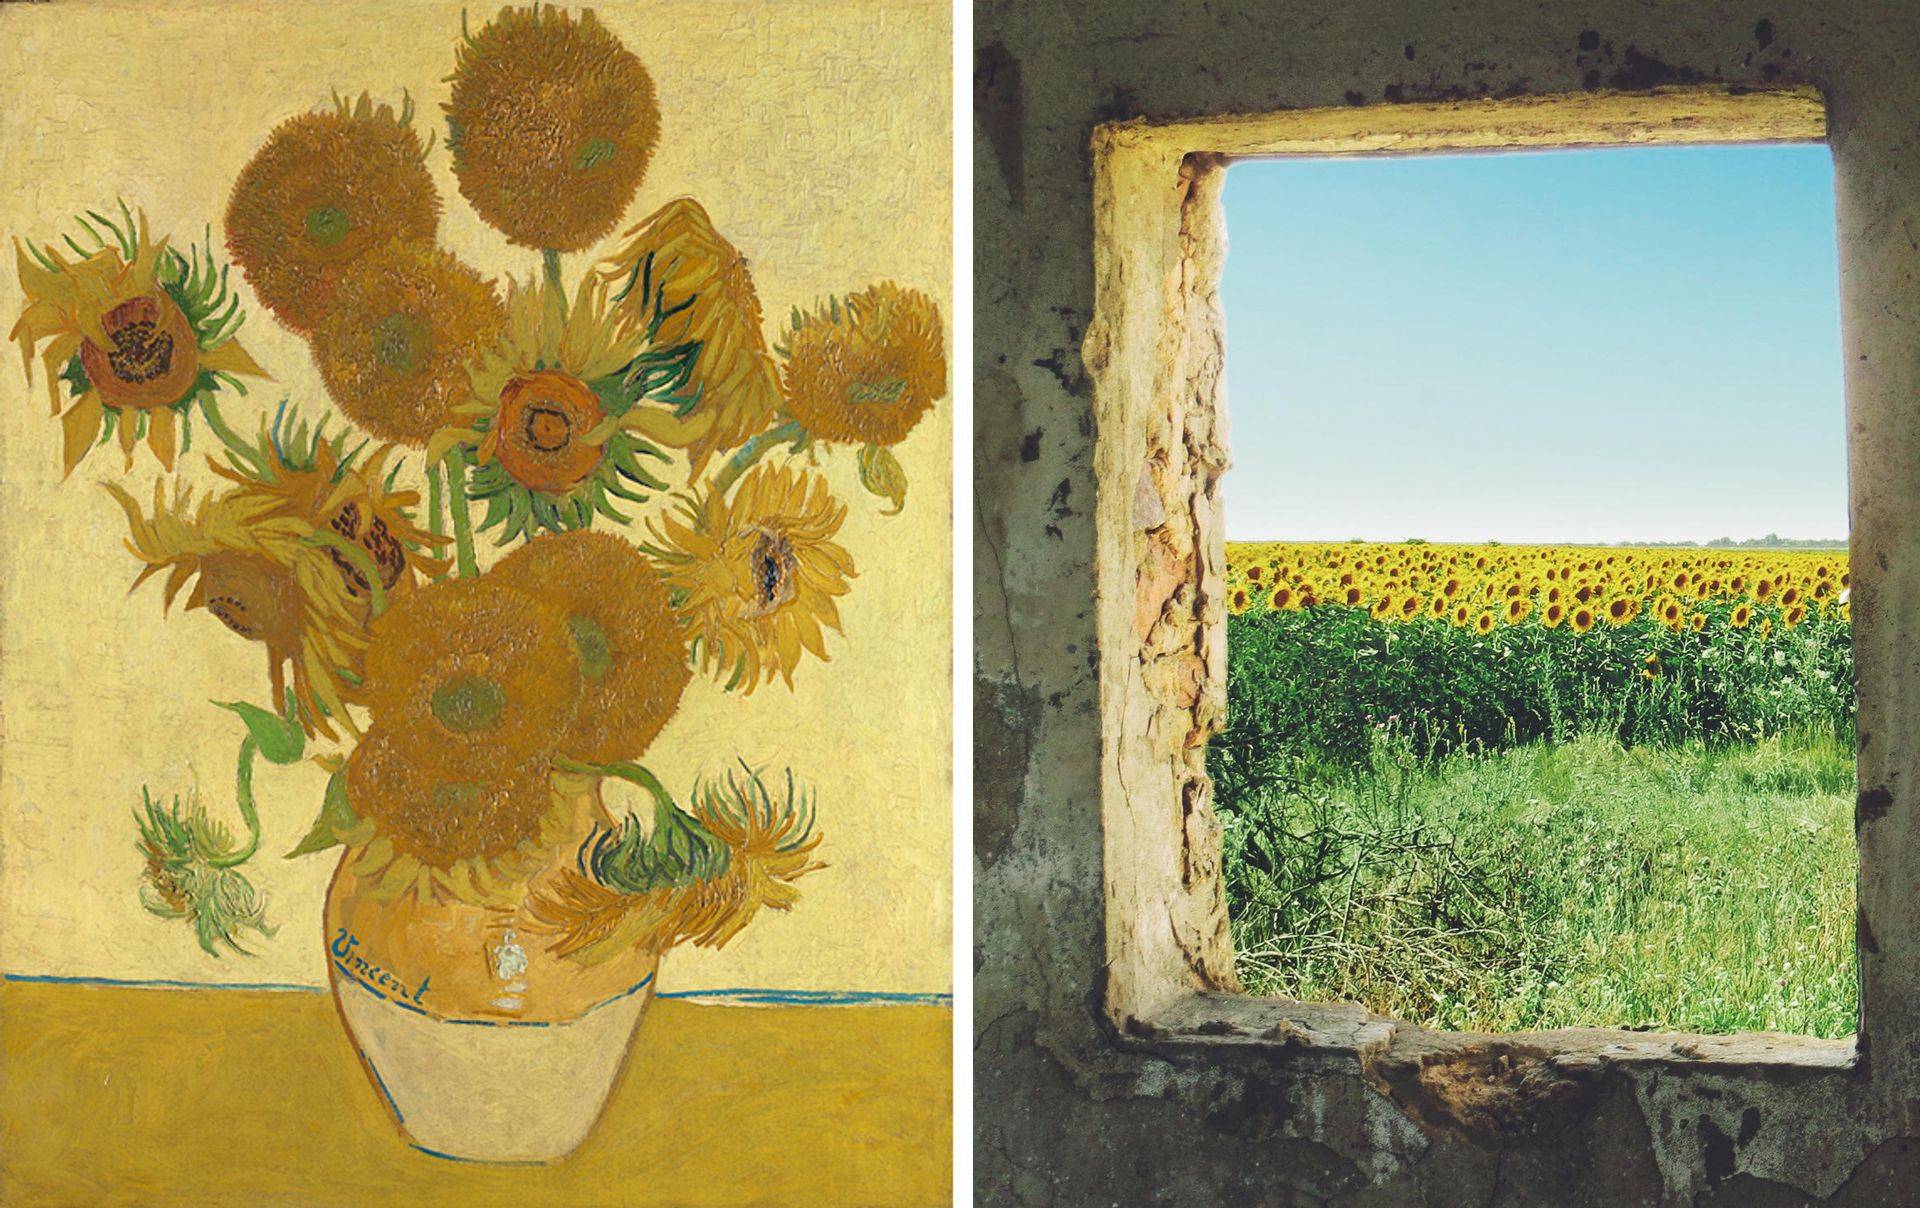 Van Gogh’s Sunflowers (August 1888, left) and sunflowers growing in Ukraine (right) Credit: Van Gogh: National Gallery, London; Ukraine: Max Pixel